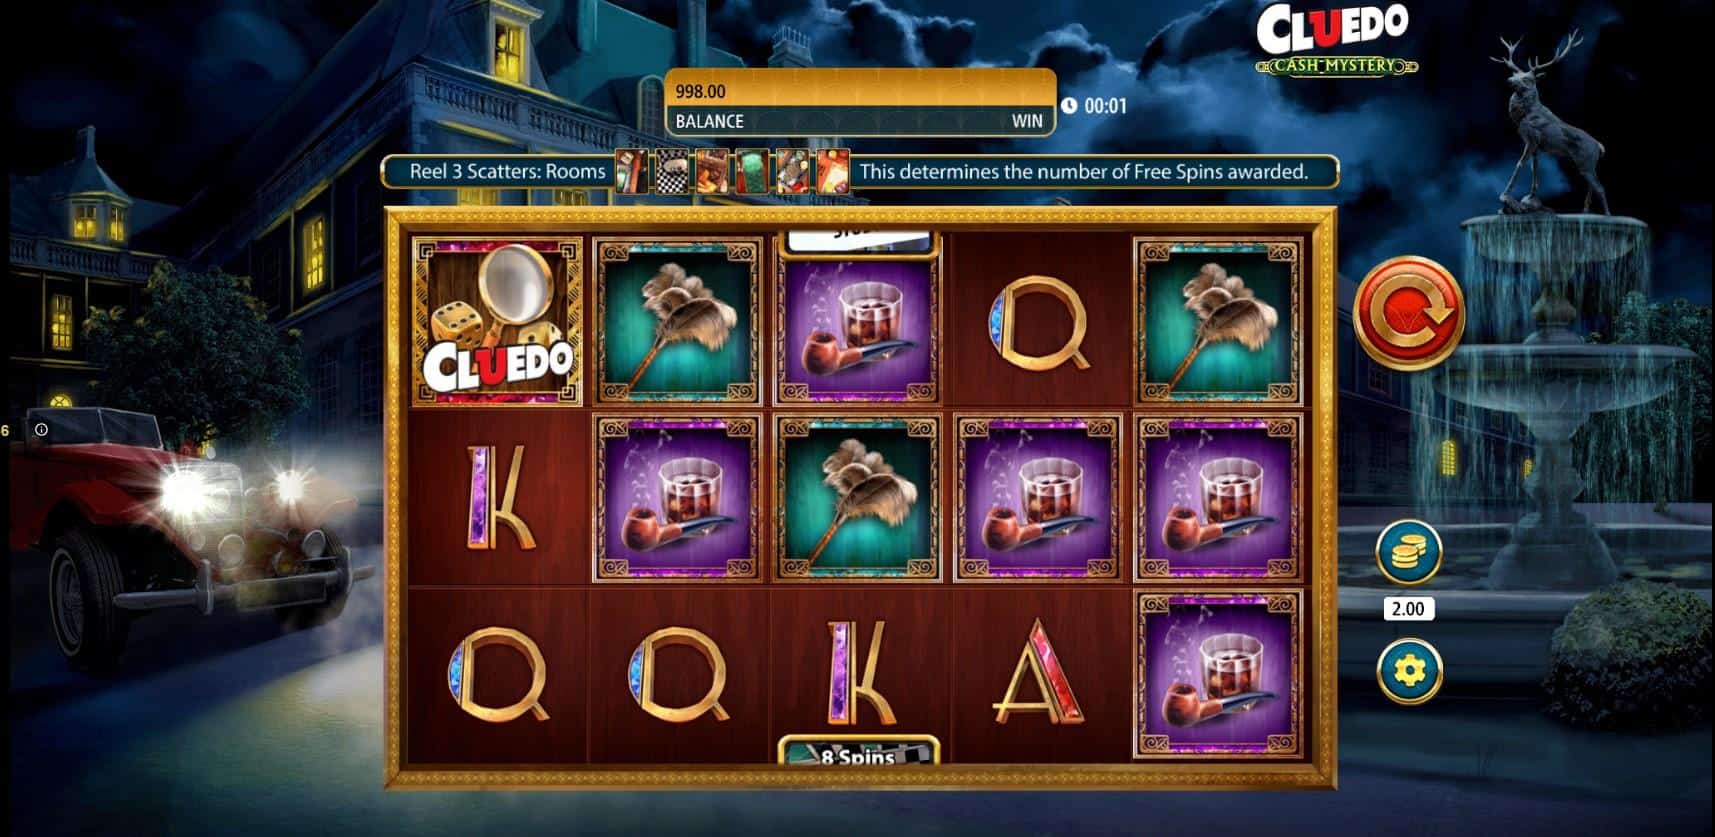 Cluedo Slot Game Hasbro Slots at Monopoly Casino